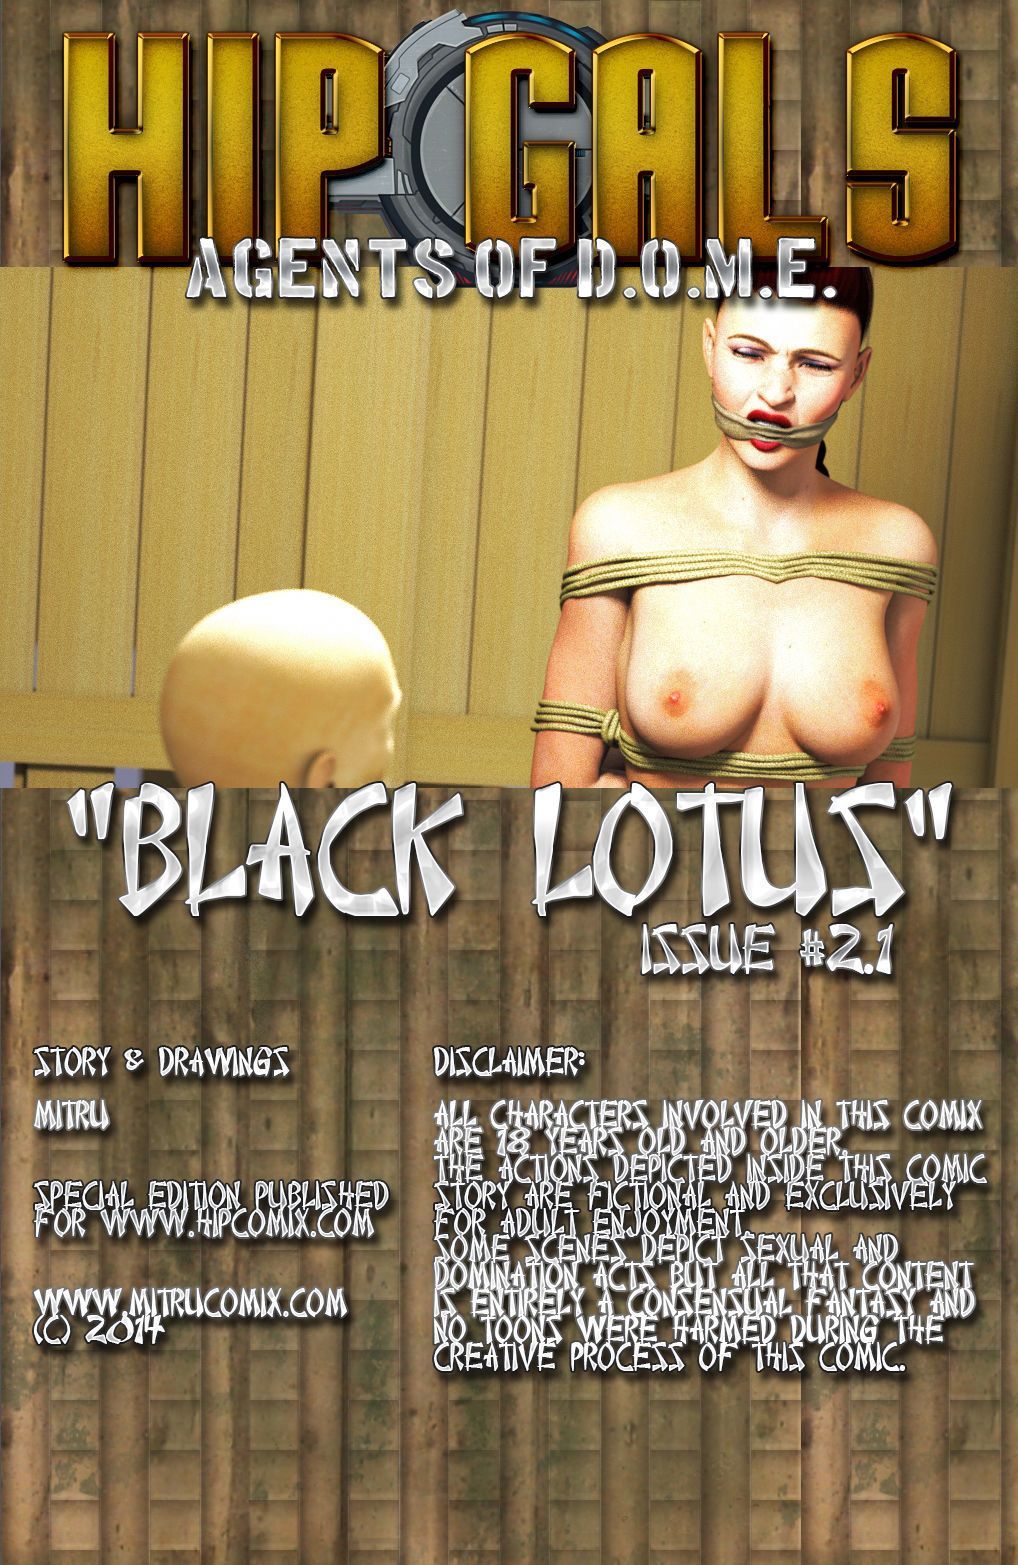 [mitru] noir Lotus 1 6 PARTIE 2